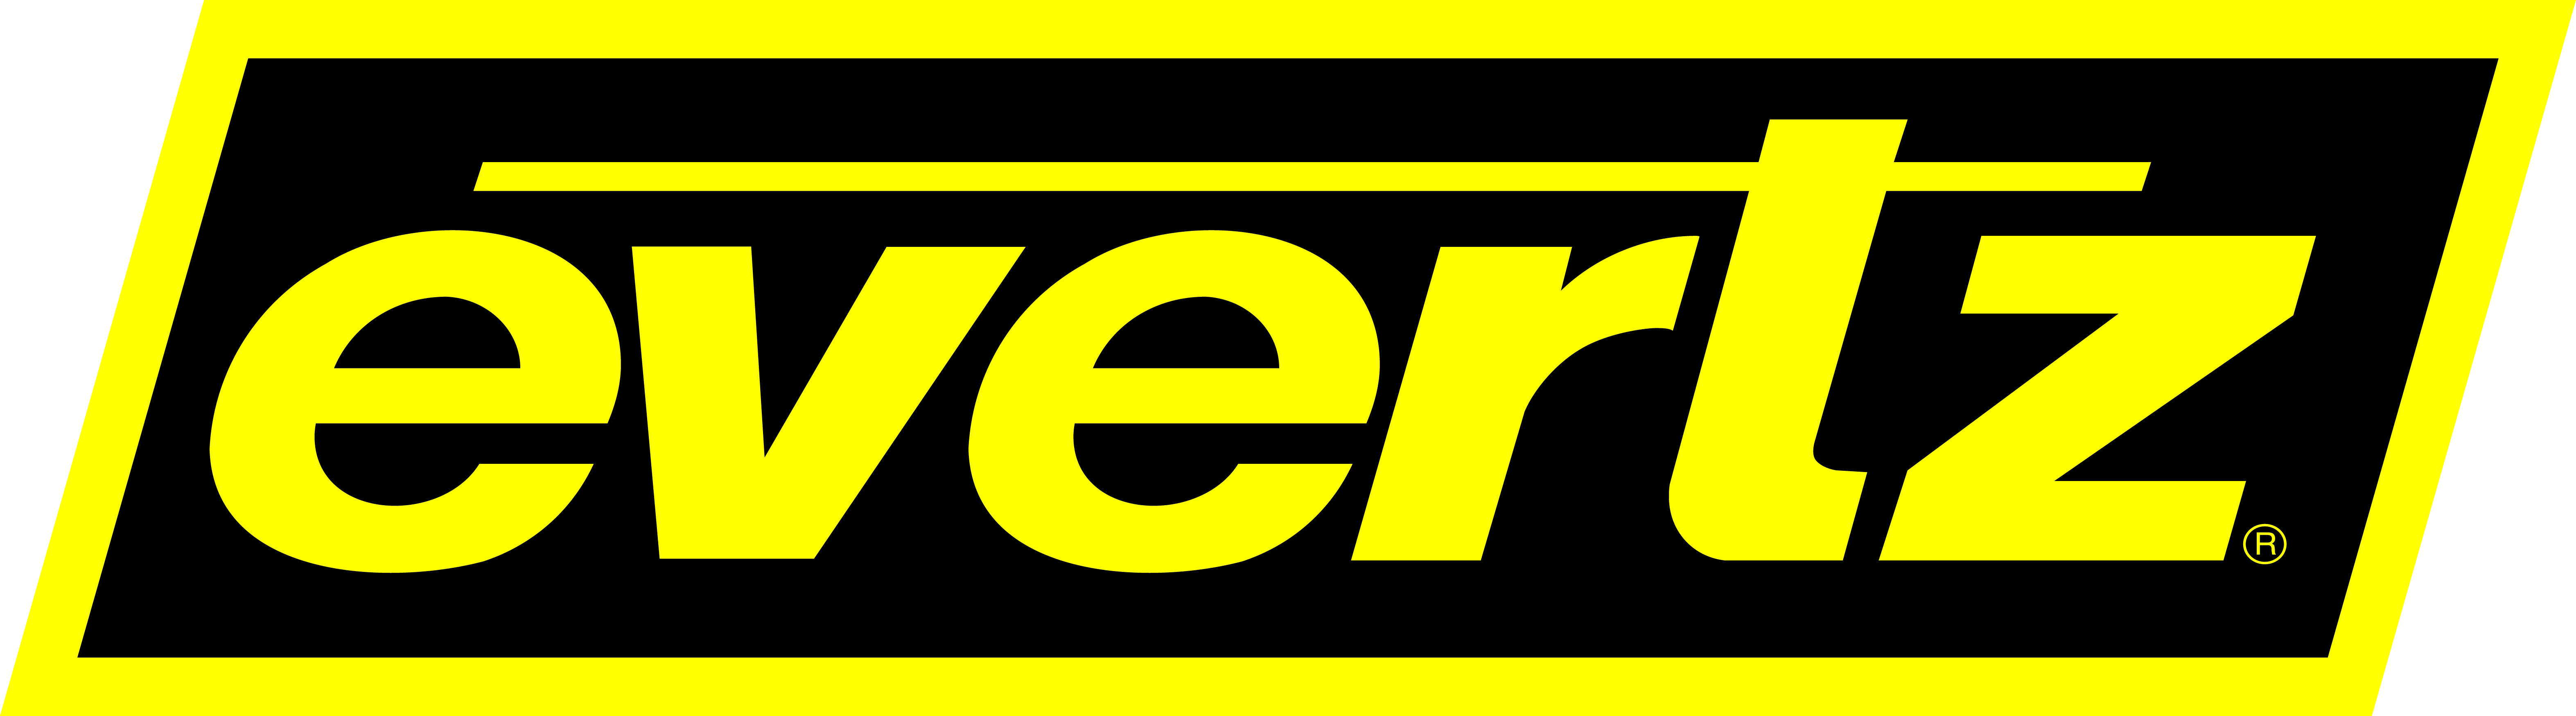 Evertz Logo - Ross and Evertz announce collaboration to put ASPEN 10GE IP ...